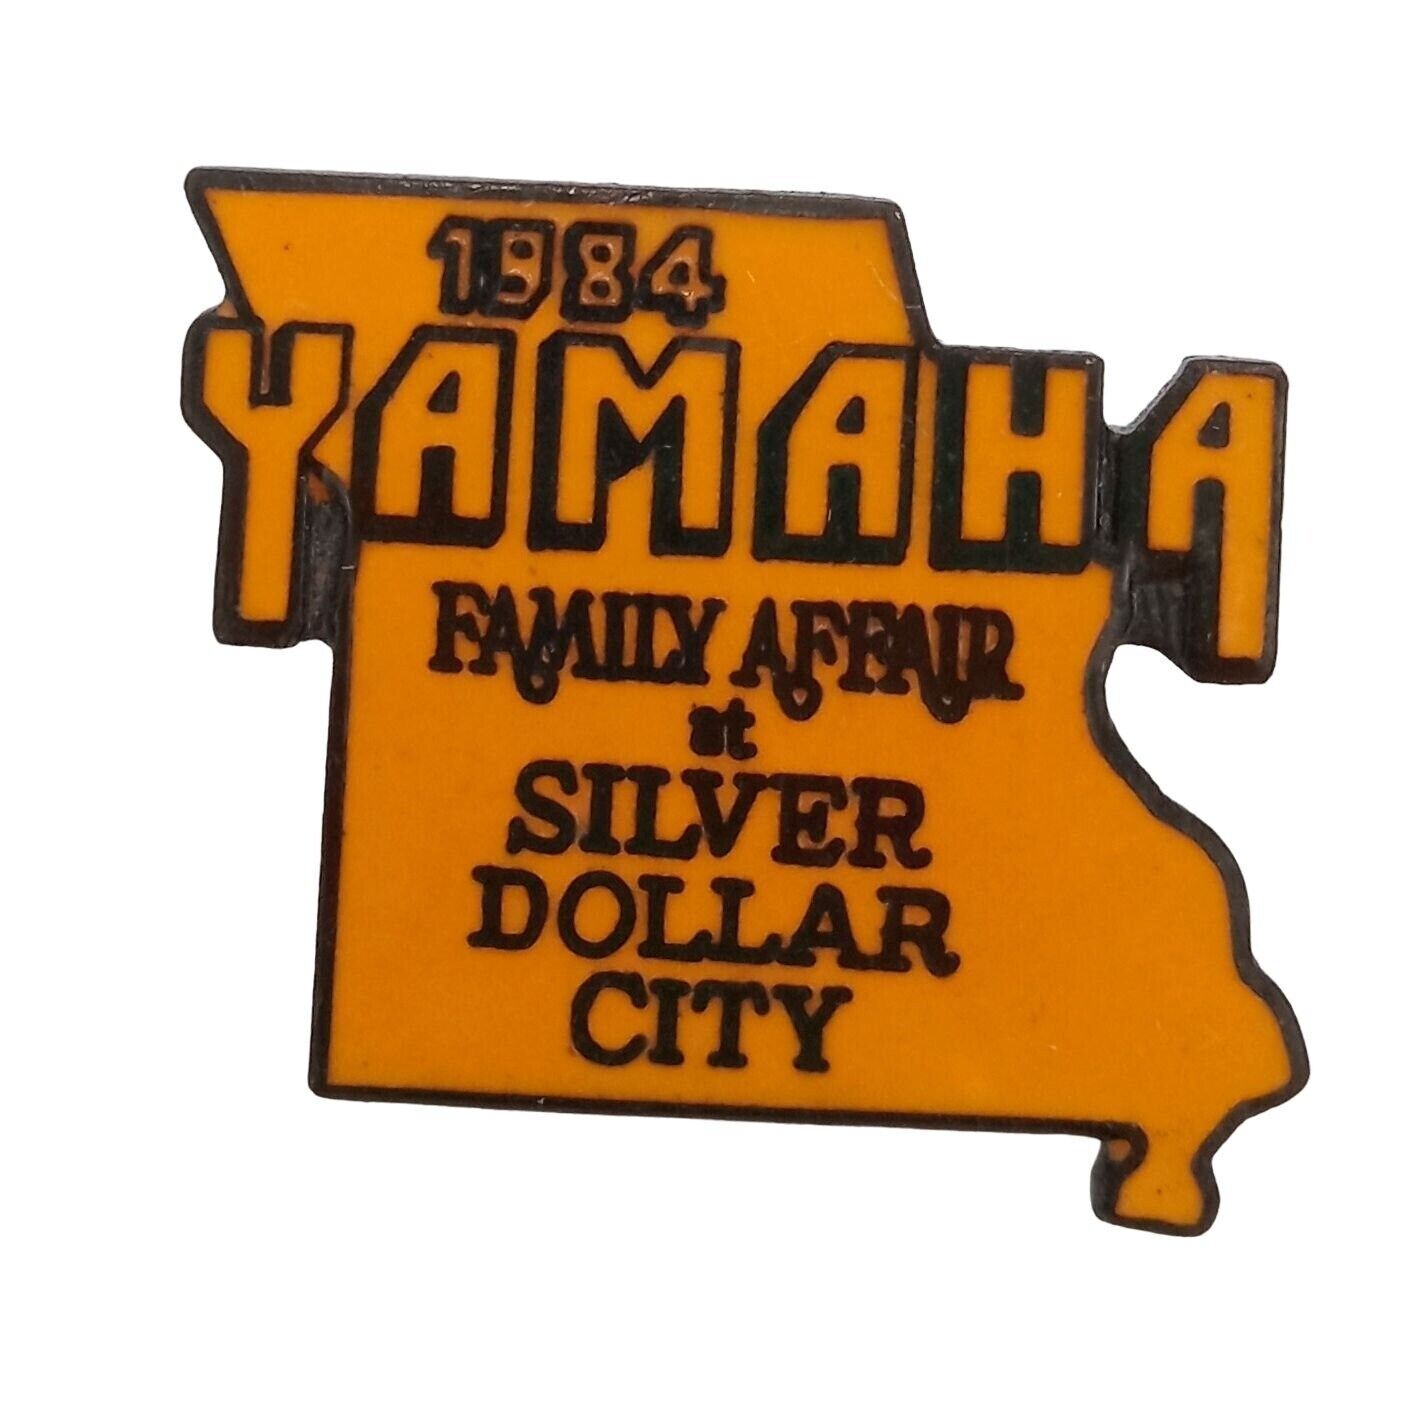 1984 Yamaha Lapel Hat Pin Brooch Silver Dollar City Family Affair Vintage Yellow